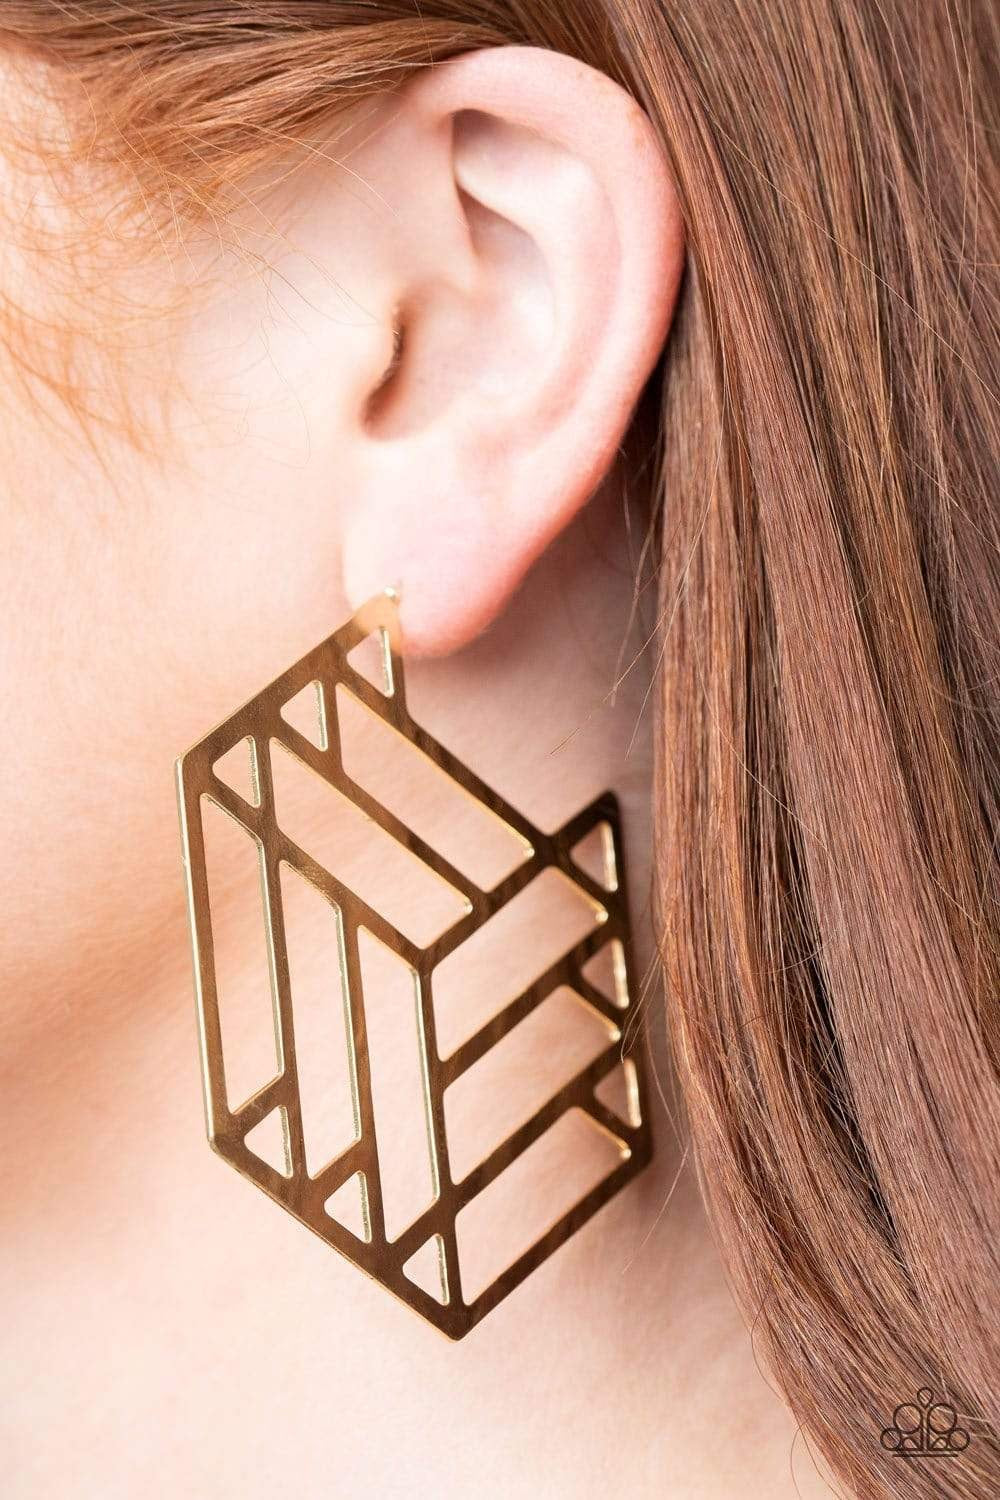 Paparazzi Jewelry Earrings Gotta Get GEO-ing - Gold Hoop